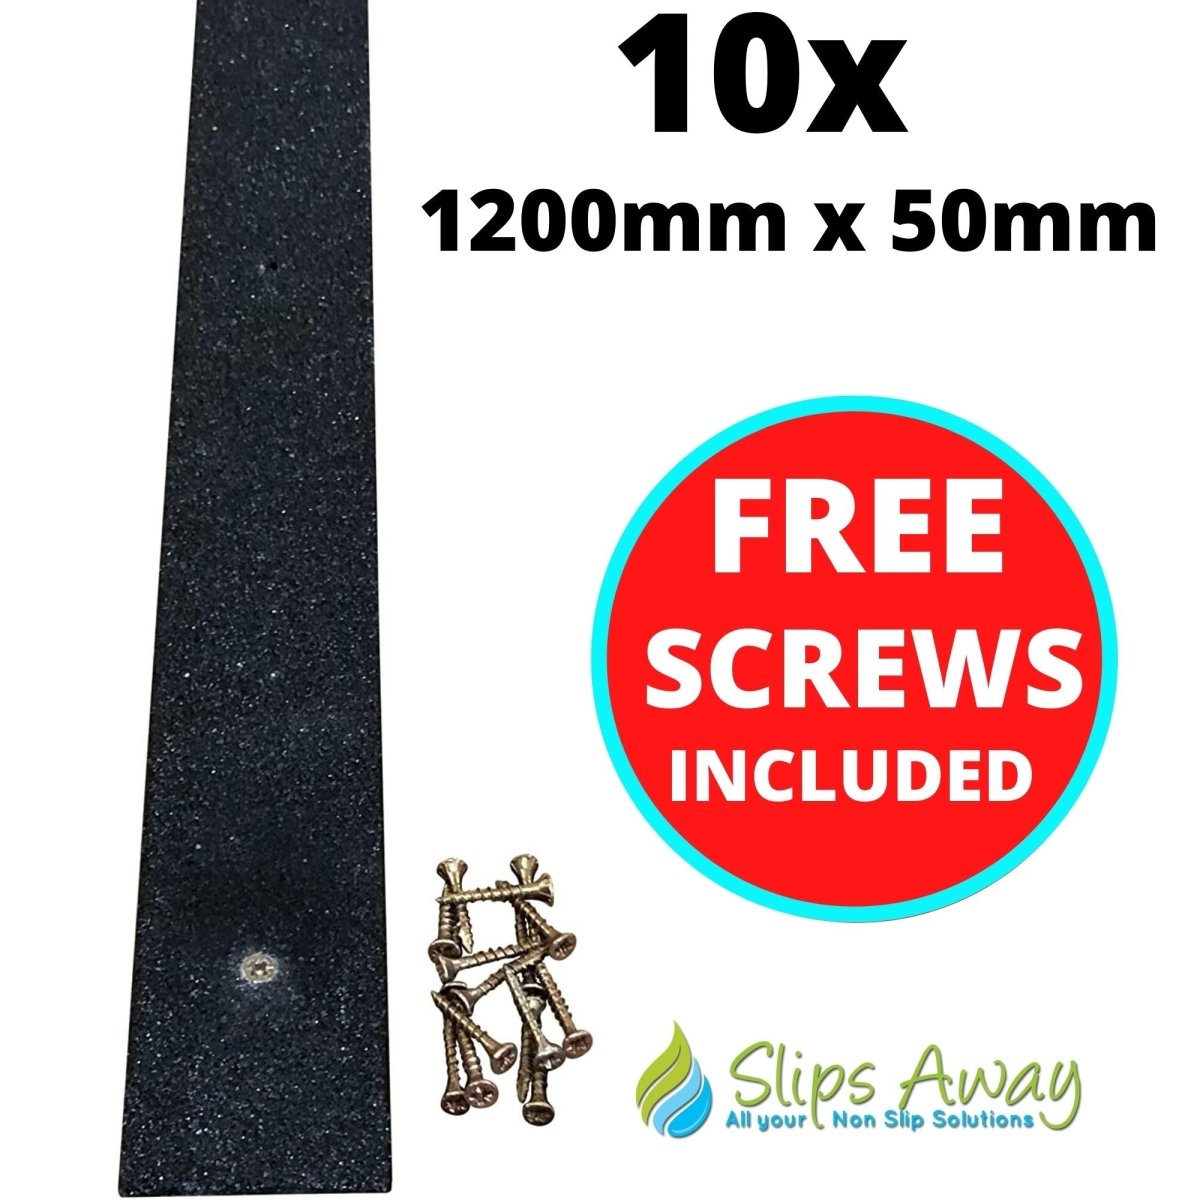 Black Non Slip Decking Strips - Slips Away - decking strip black 1200mm x 50mm 10x pack -